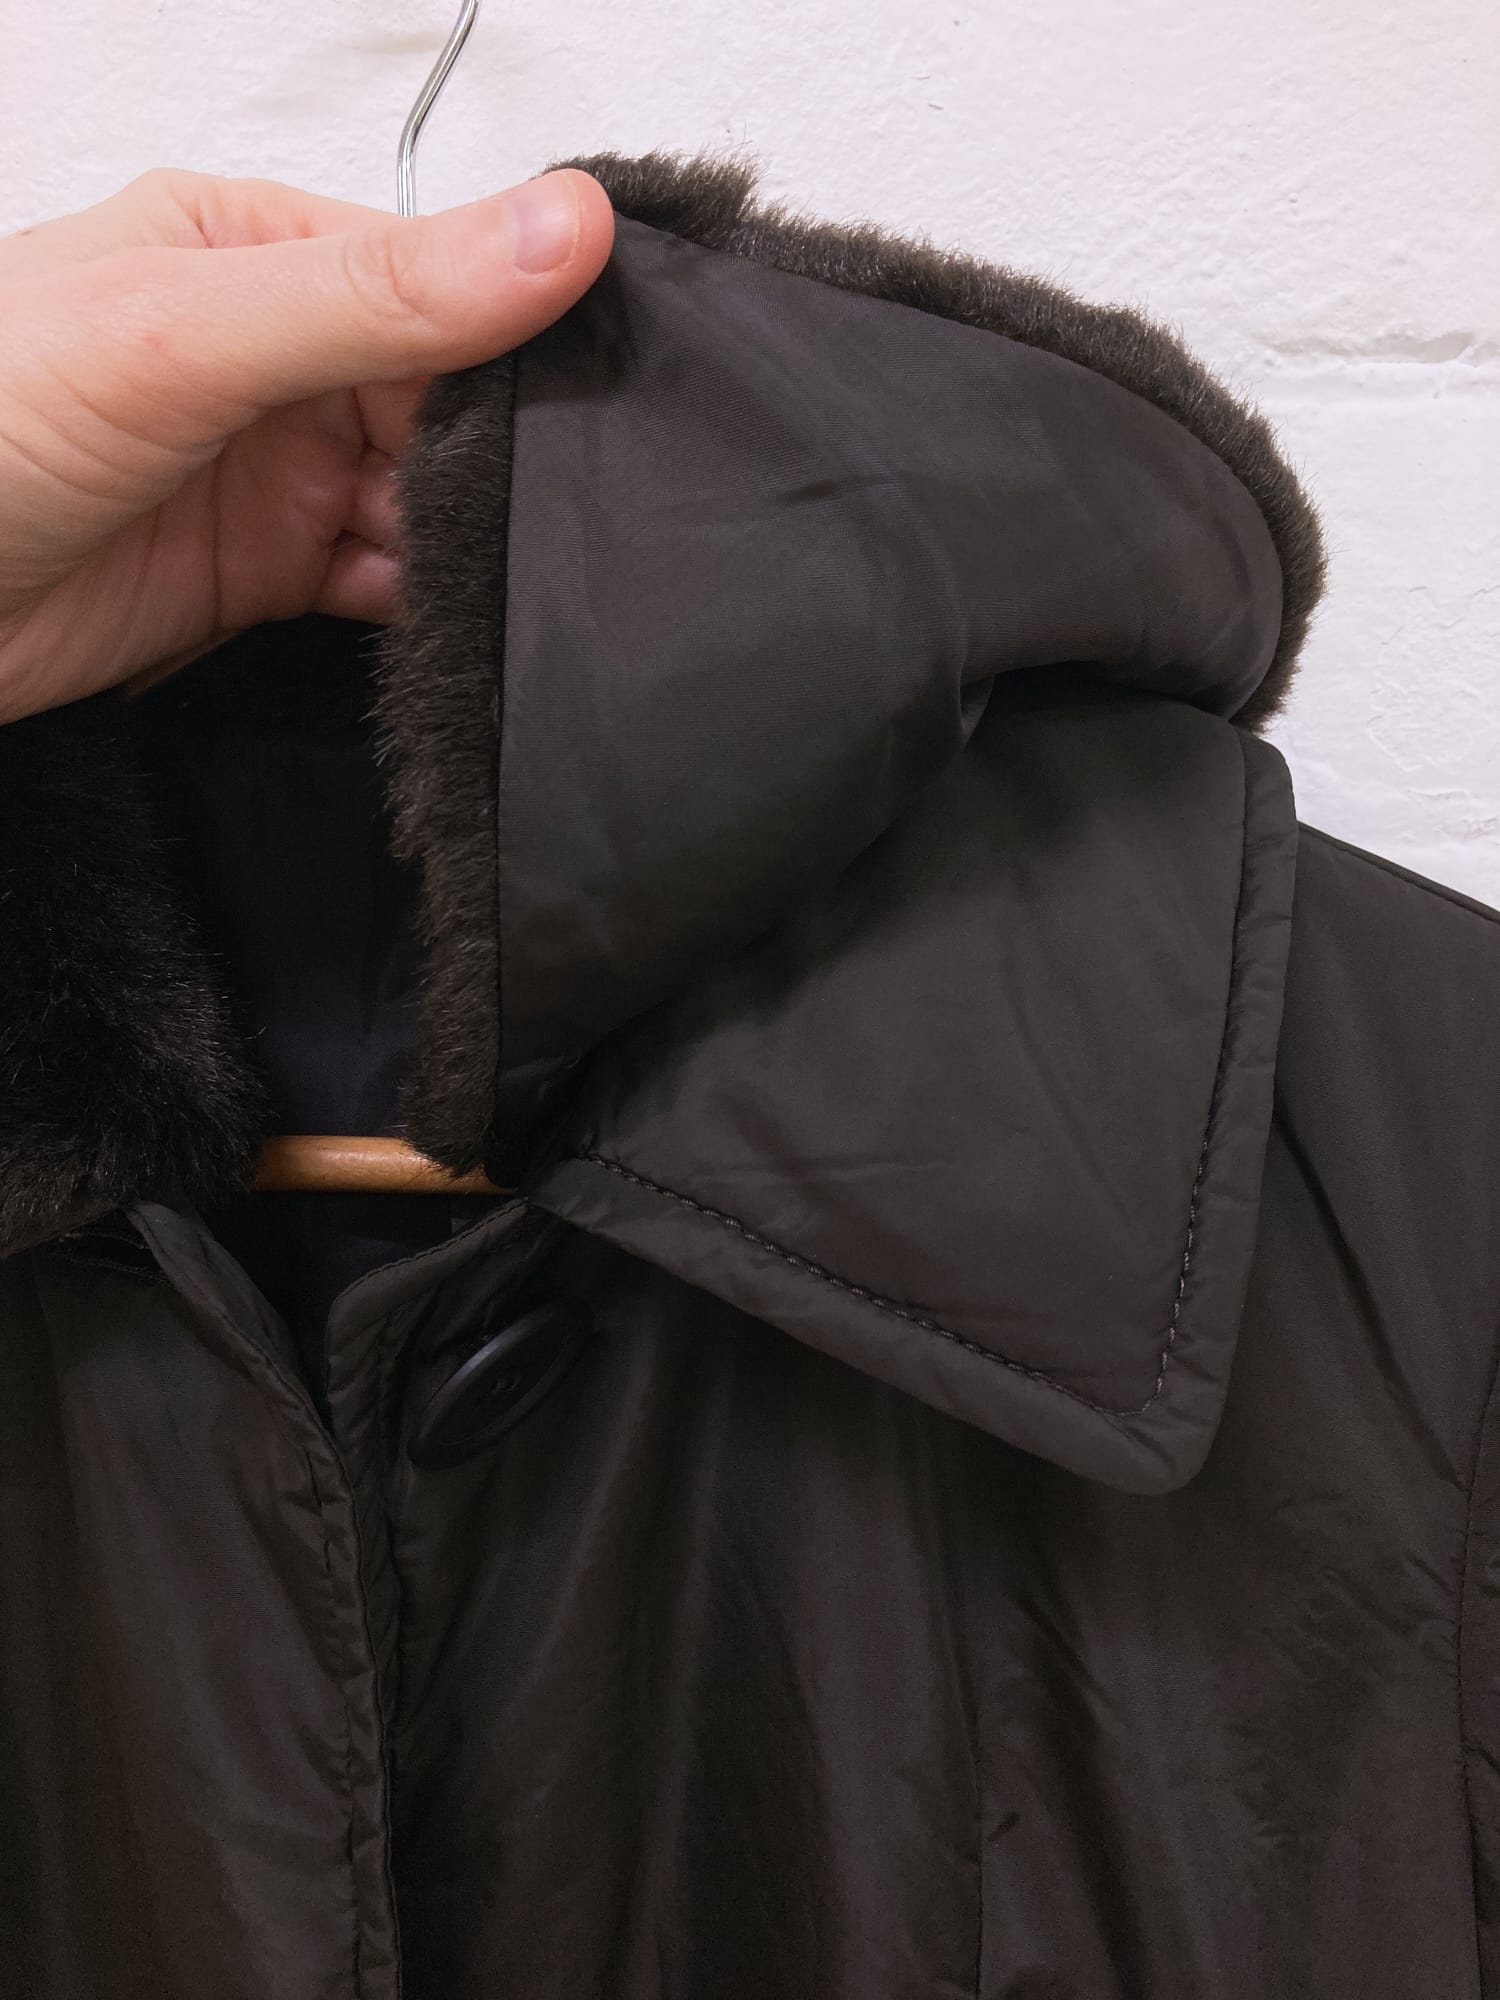 A.T. Atsuro Tayama dark brown nylon coat with detachable faux fur collar